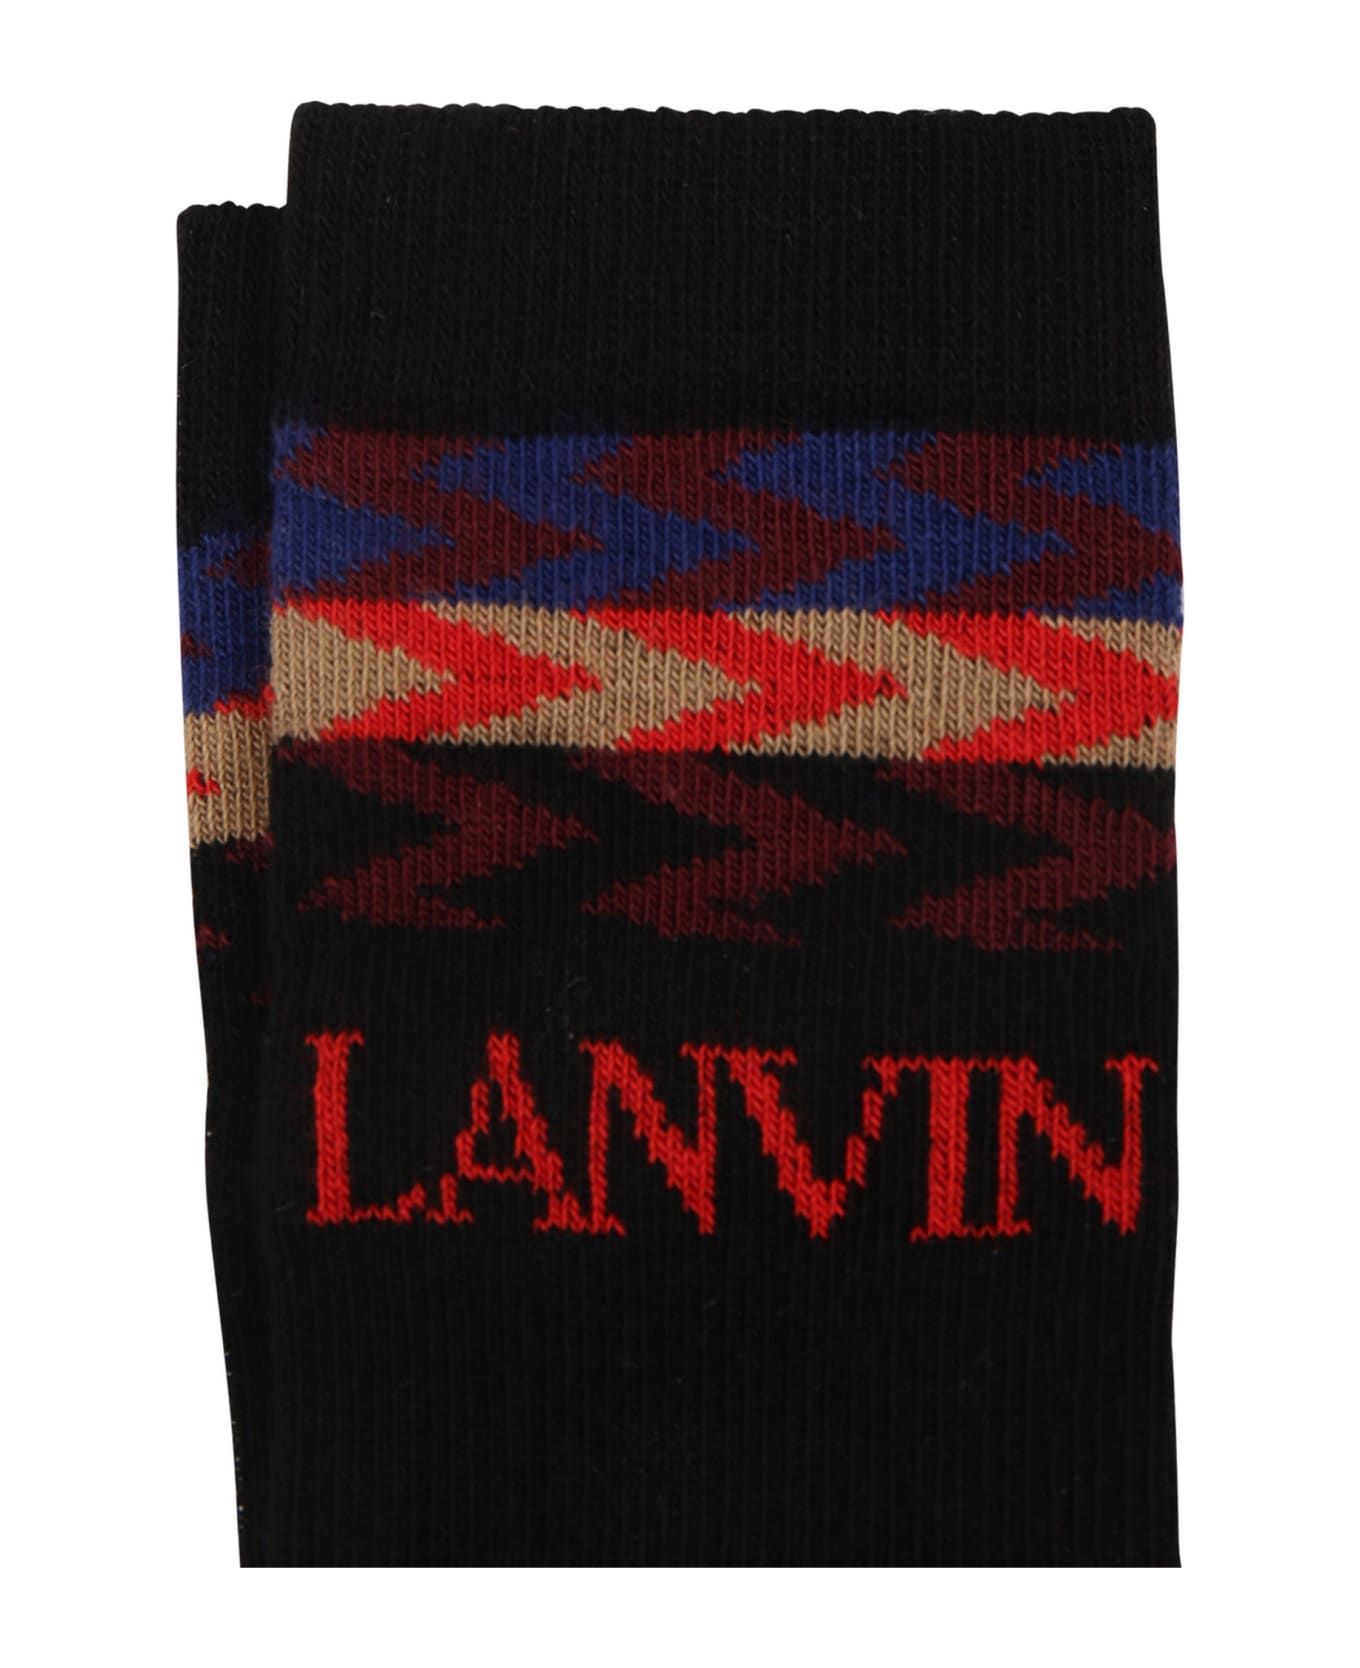 Lanvin Black Socks For Boy With Logo - Black